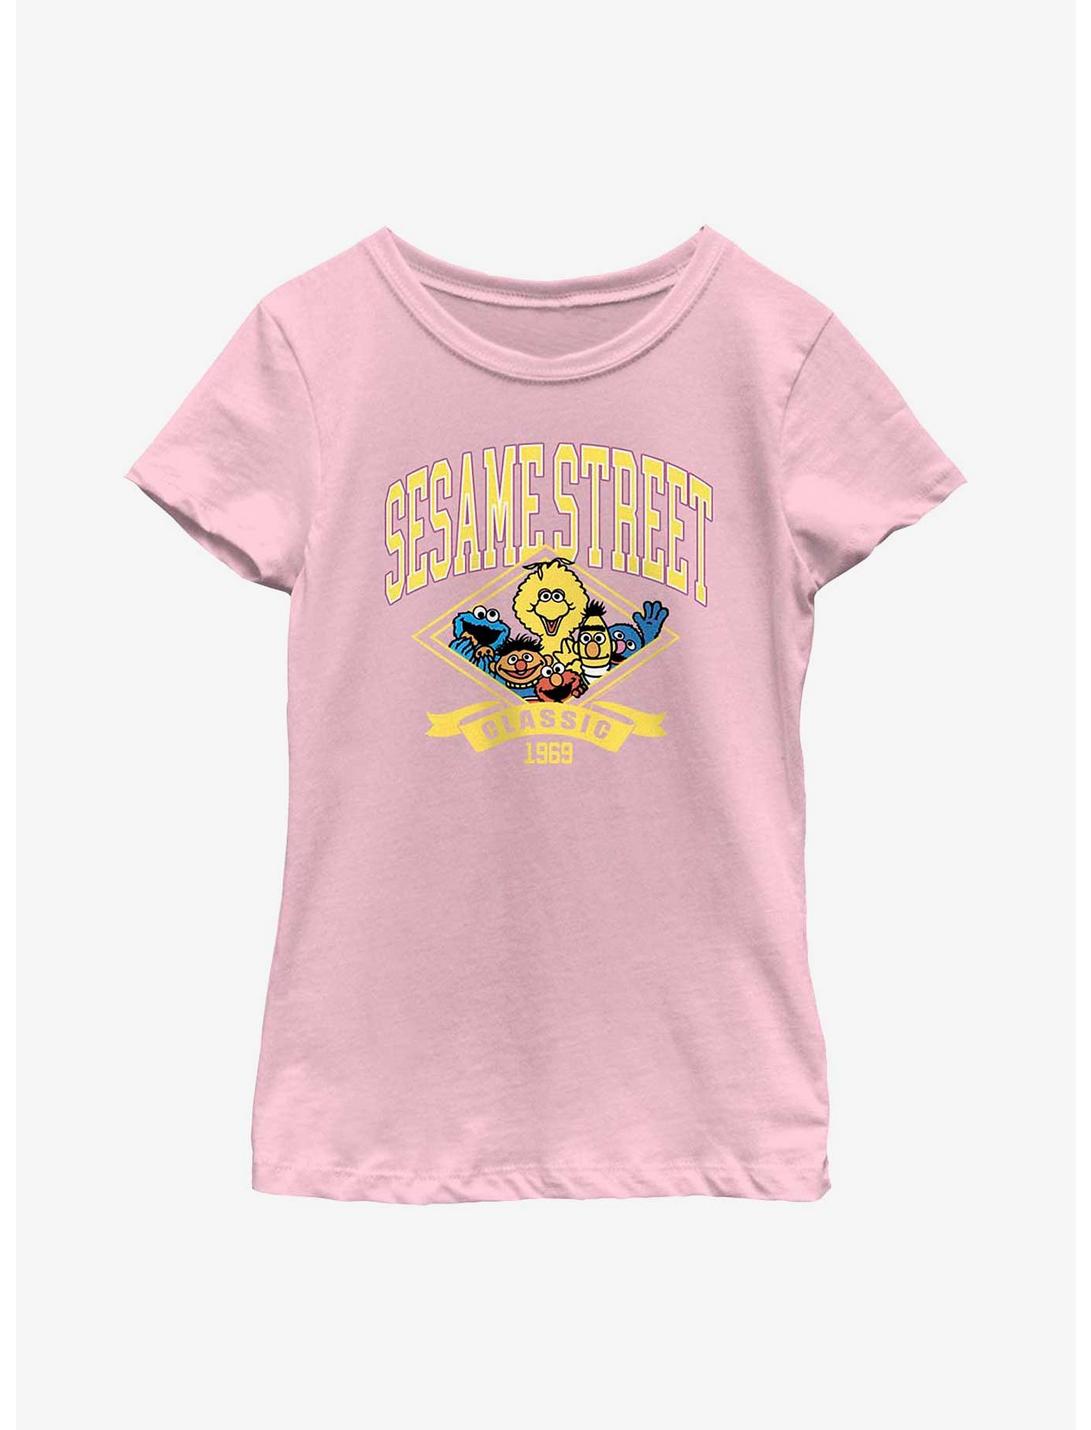 Sesame Street Classic 1969 Youth Girls T-Shirt, PINK, hi-res